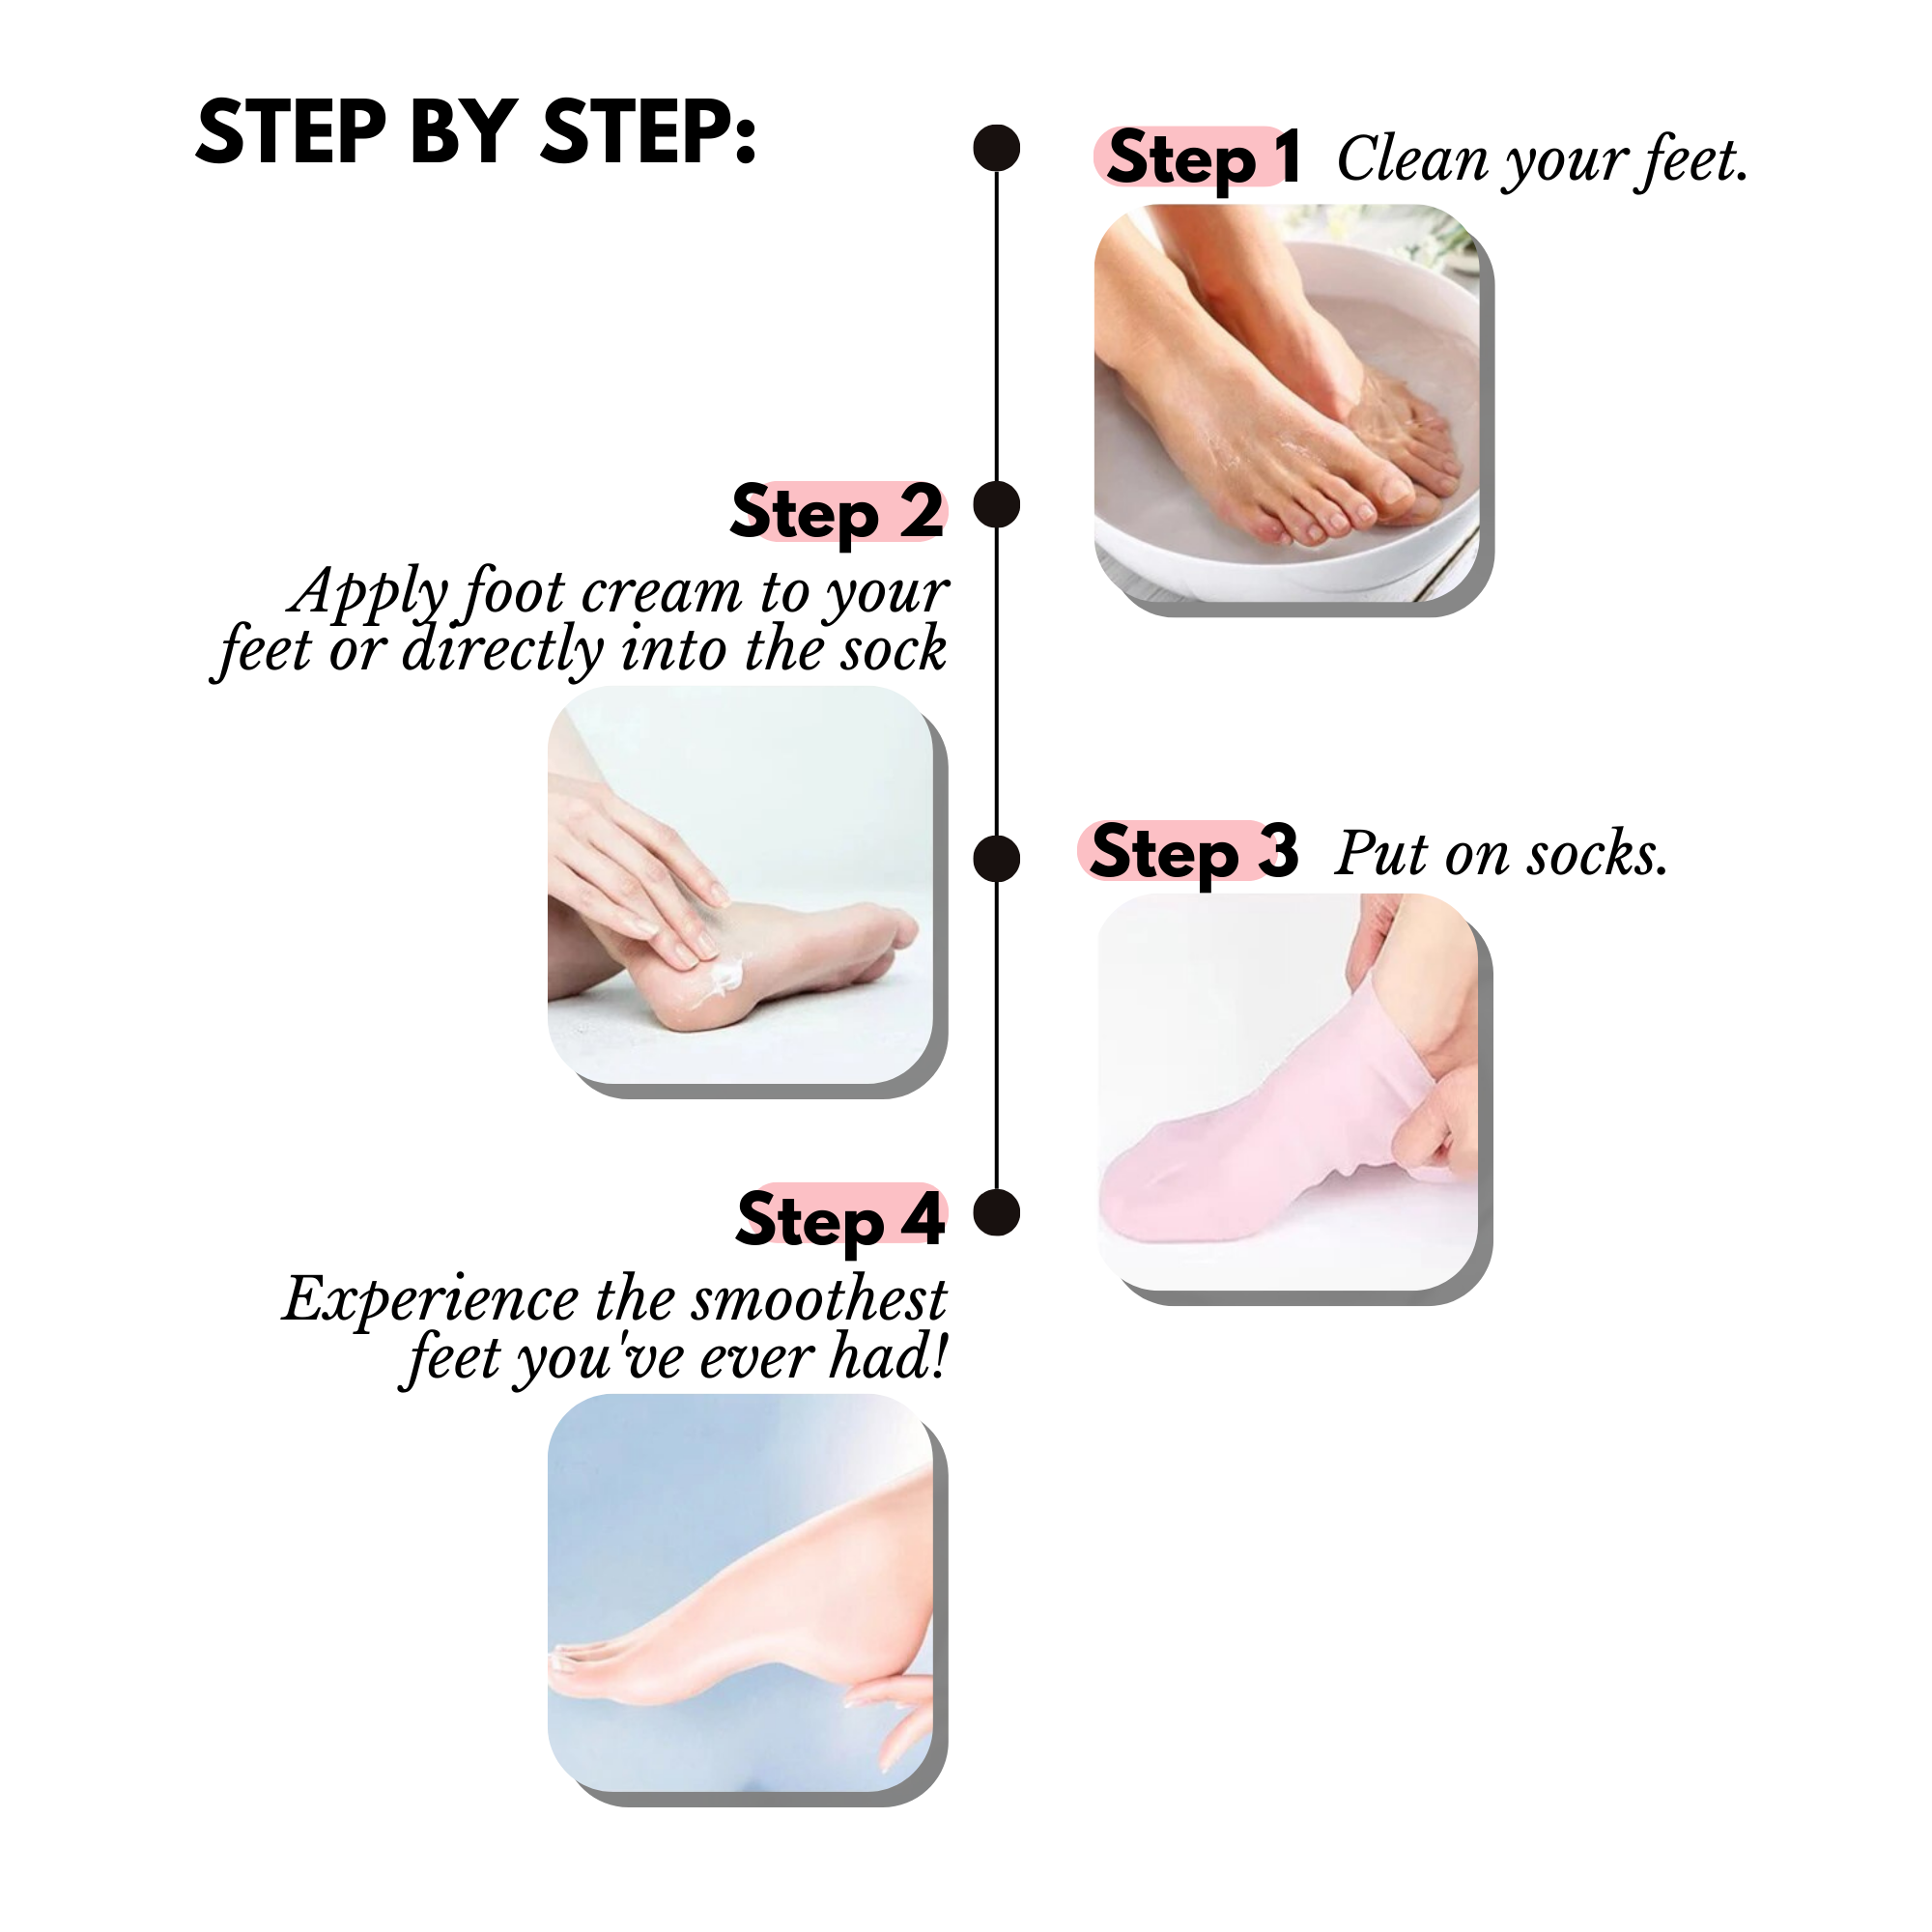 Footies™ Reusable Moisturizing Foot Mask Silicone Socks | BUY 1 PAIR GET 2 PAIRS